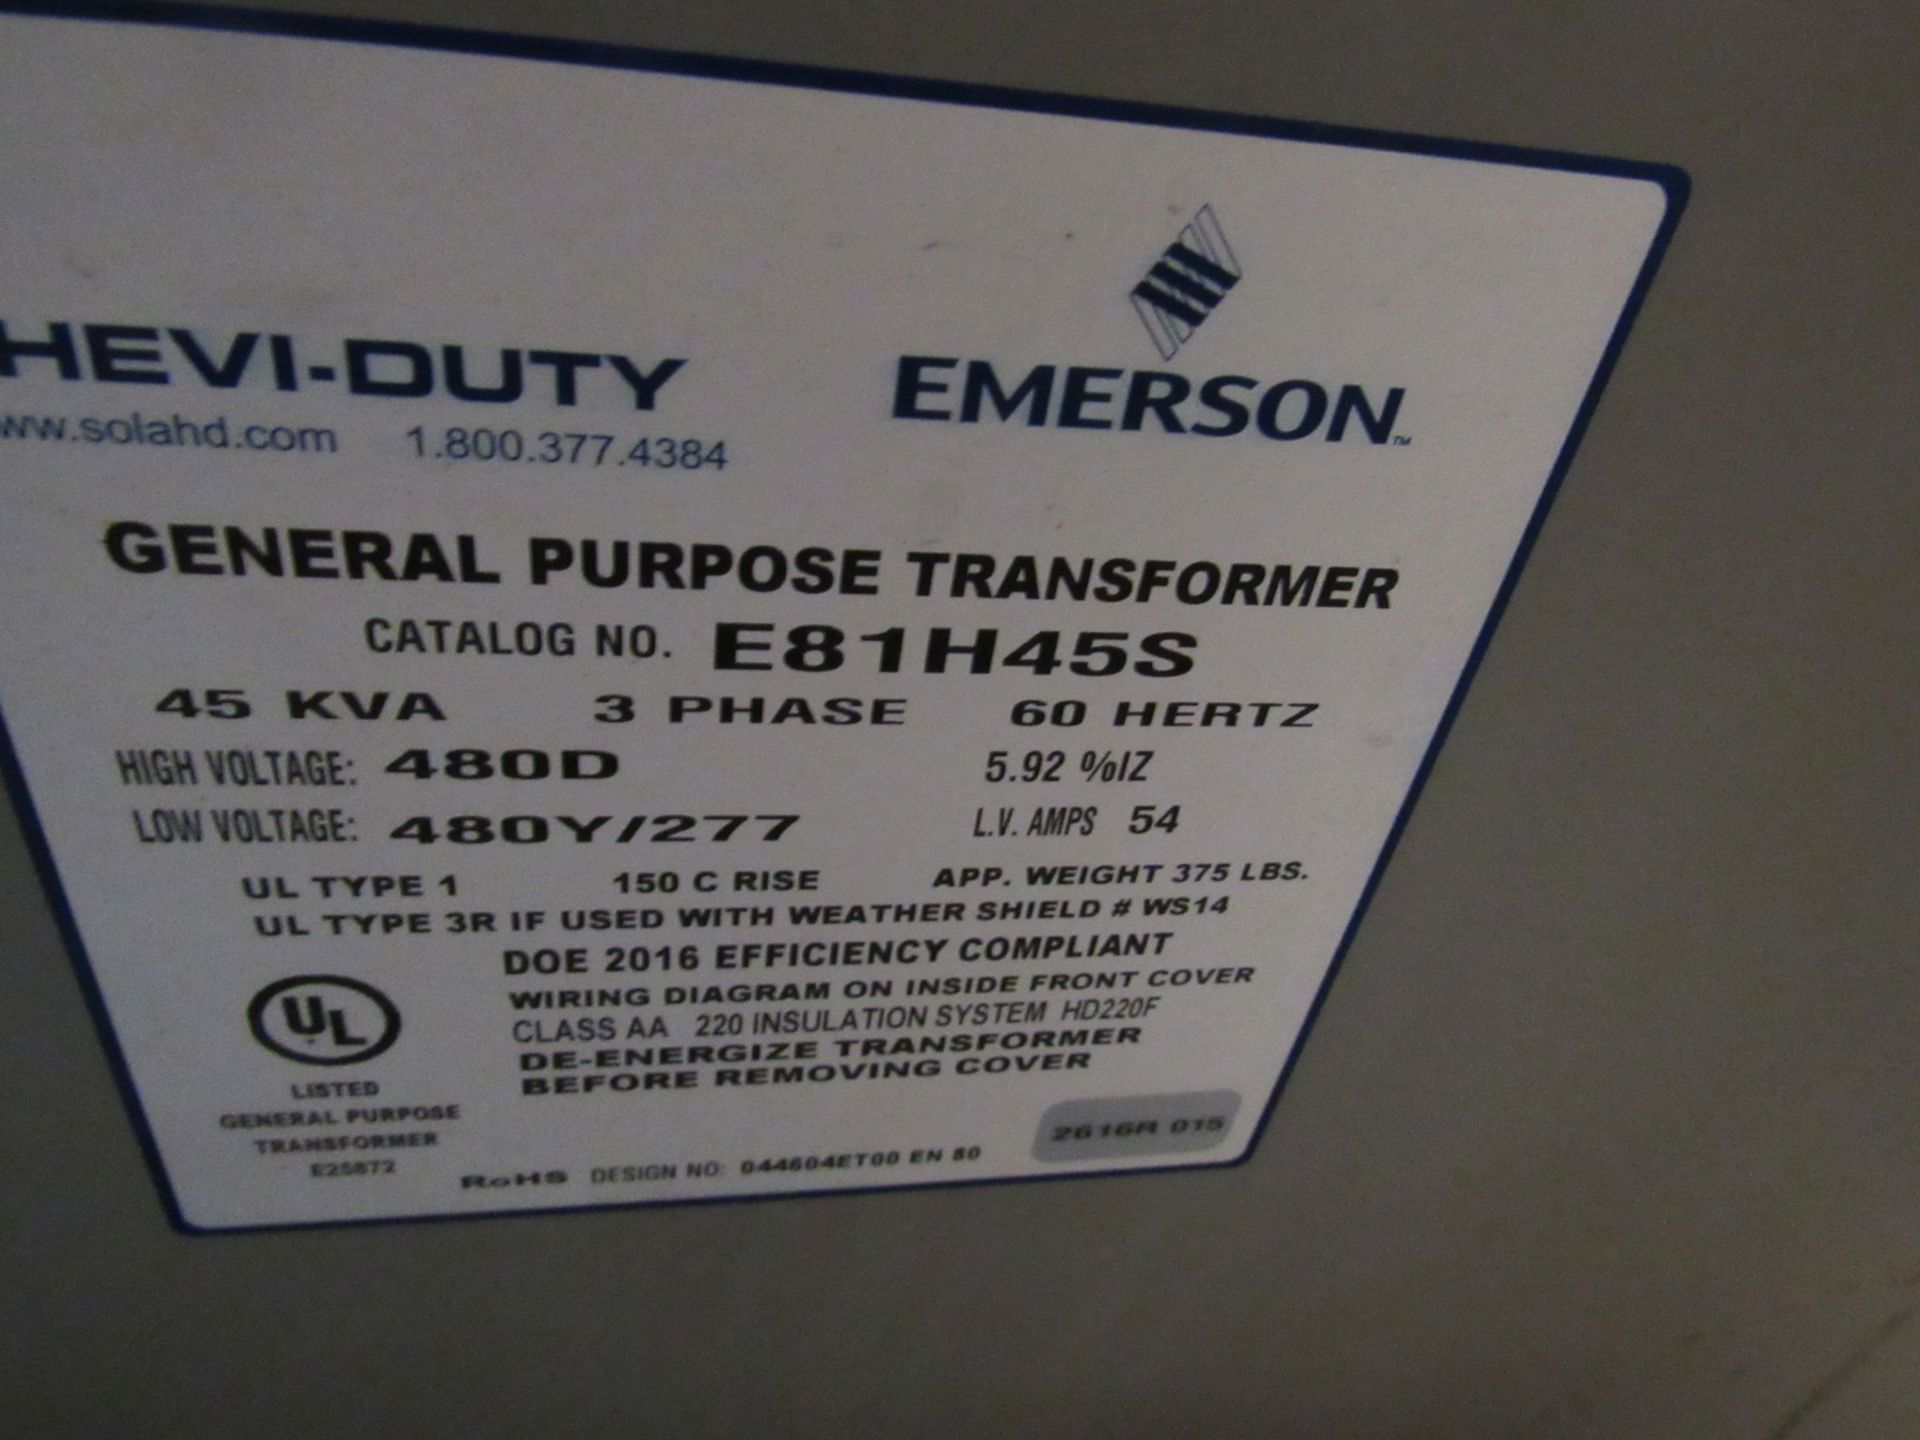 45 KVA Heavy-Duty Emerson Transformer - Bild 2 aus 3